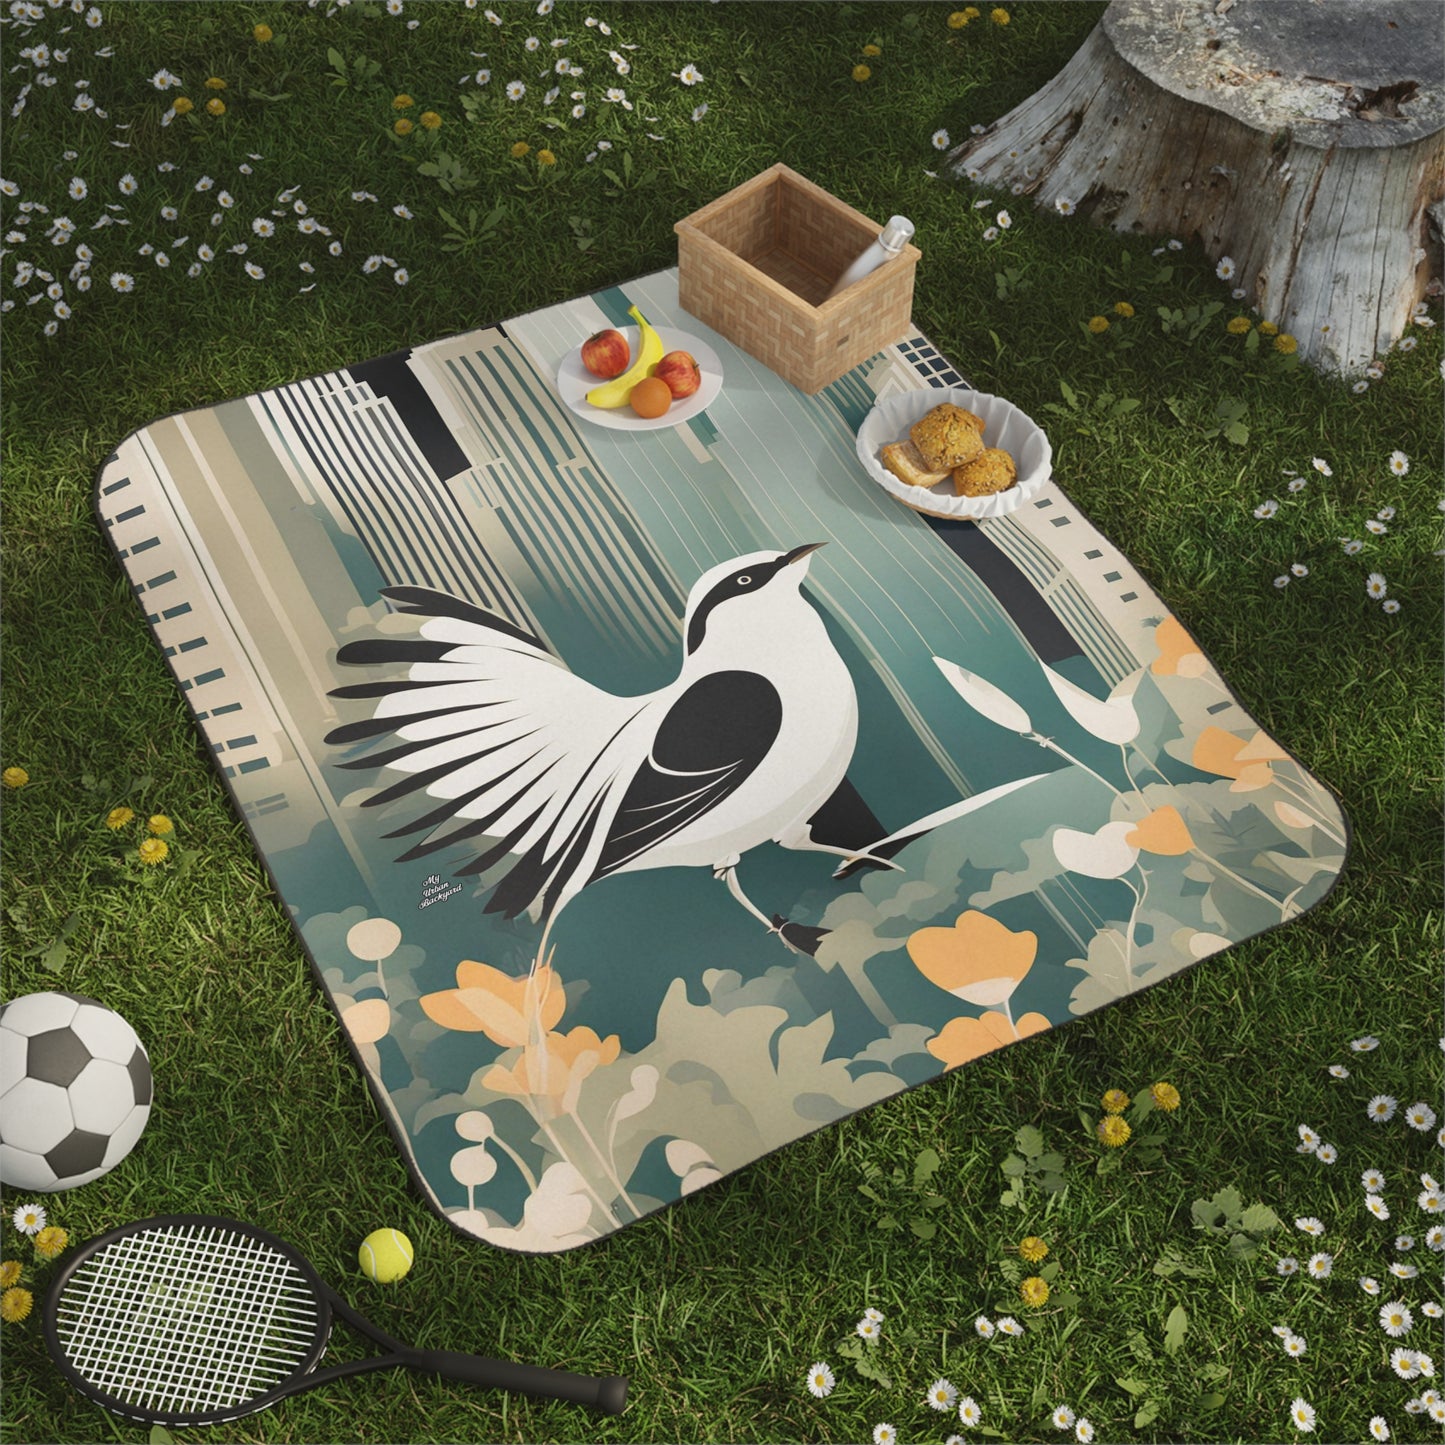 Outdoor Picnic Blanket with Soft Fleece Top and Water-Resistant Bottom - City Bird